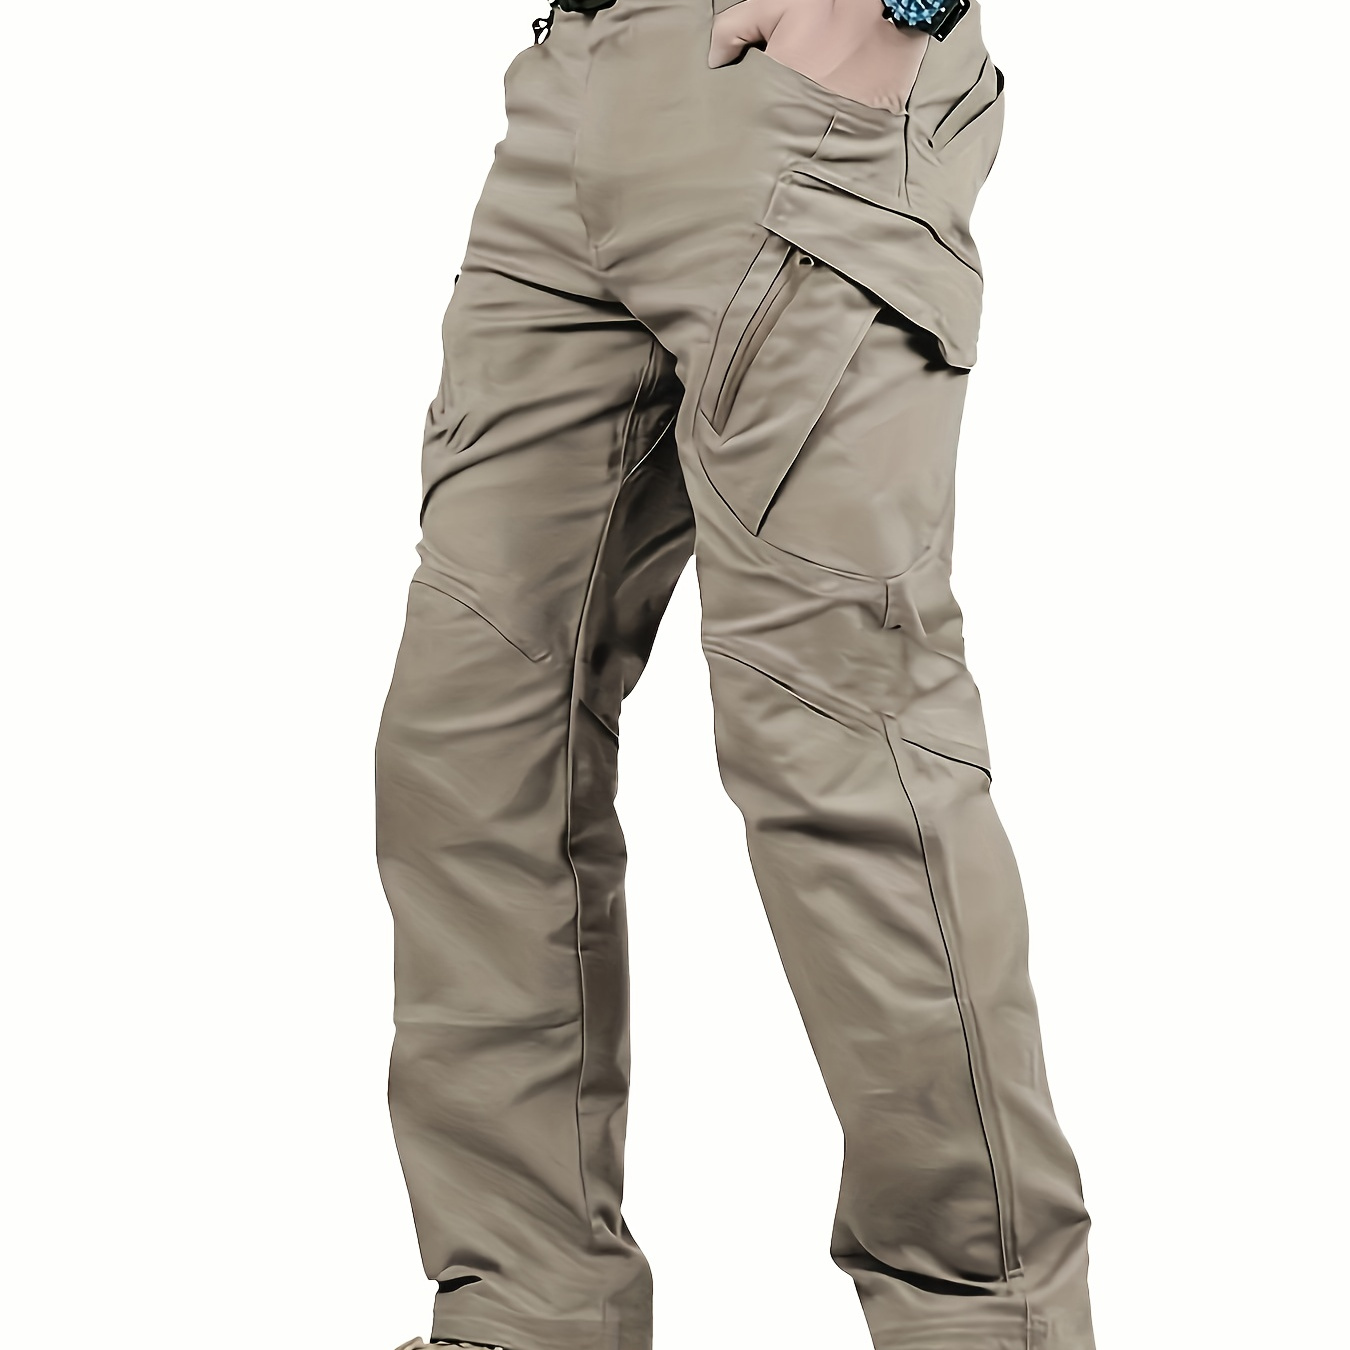 

Men's Outdoor Multi Functional Tactical Pants, Multi Pocket Outdoor Hiking Sweatpants, Cargo Pants